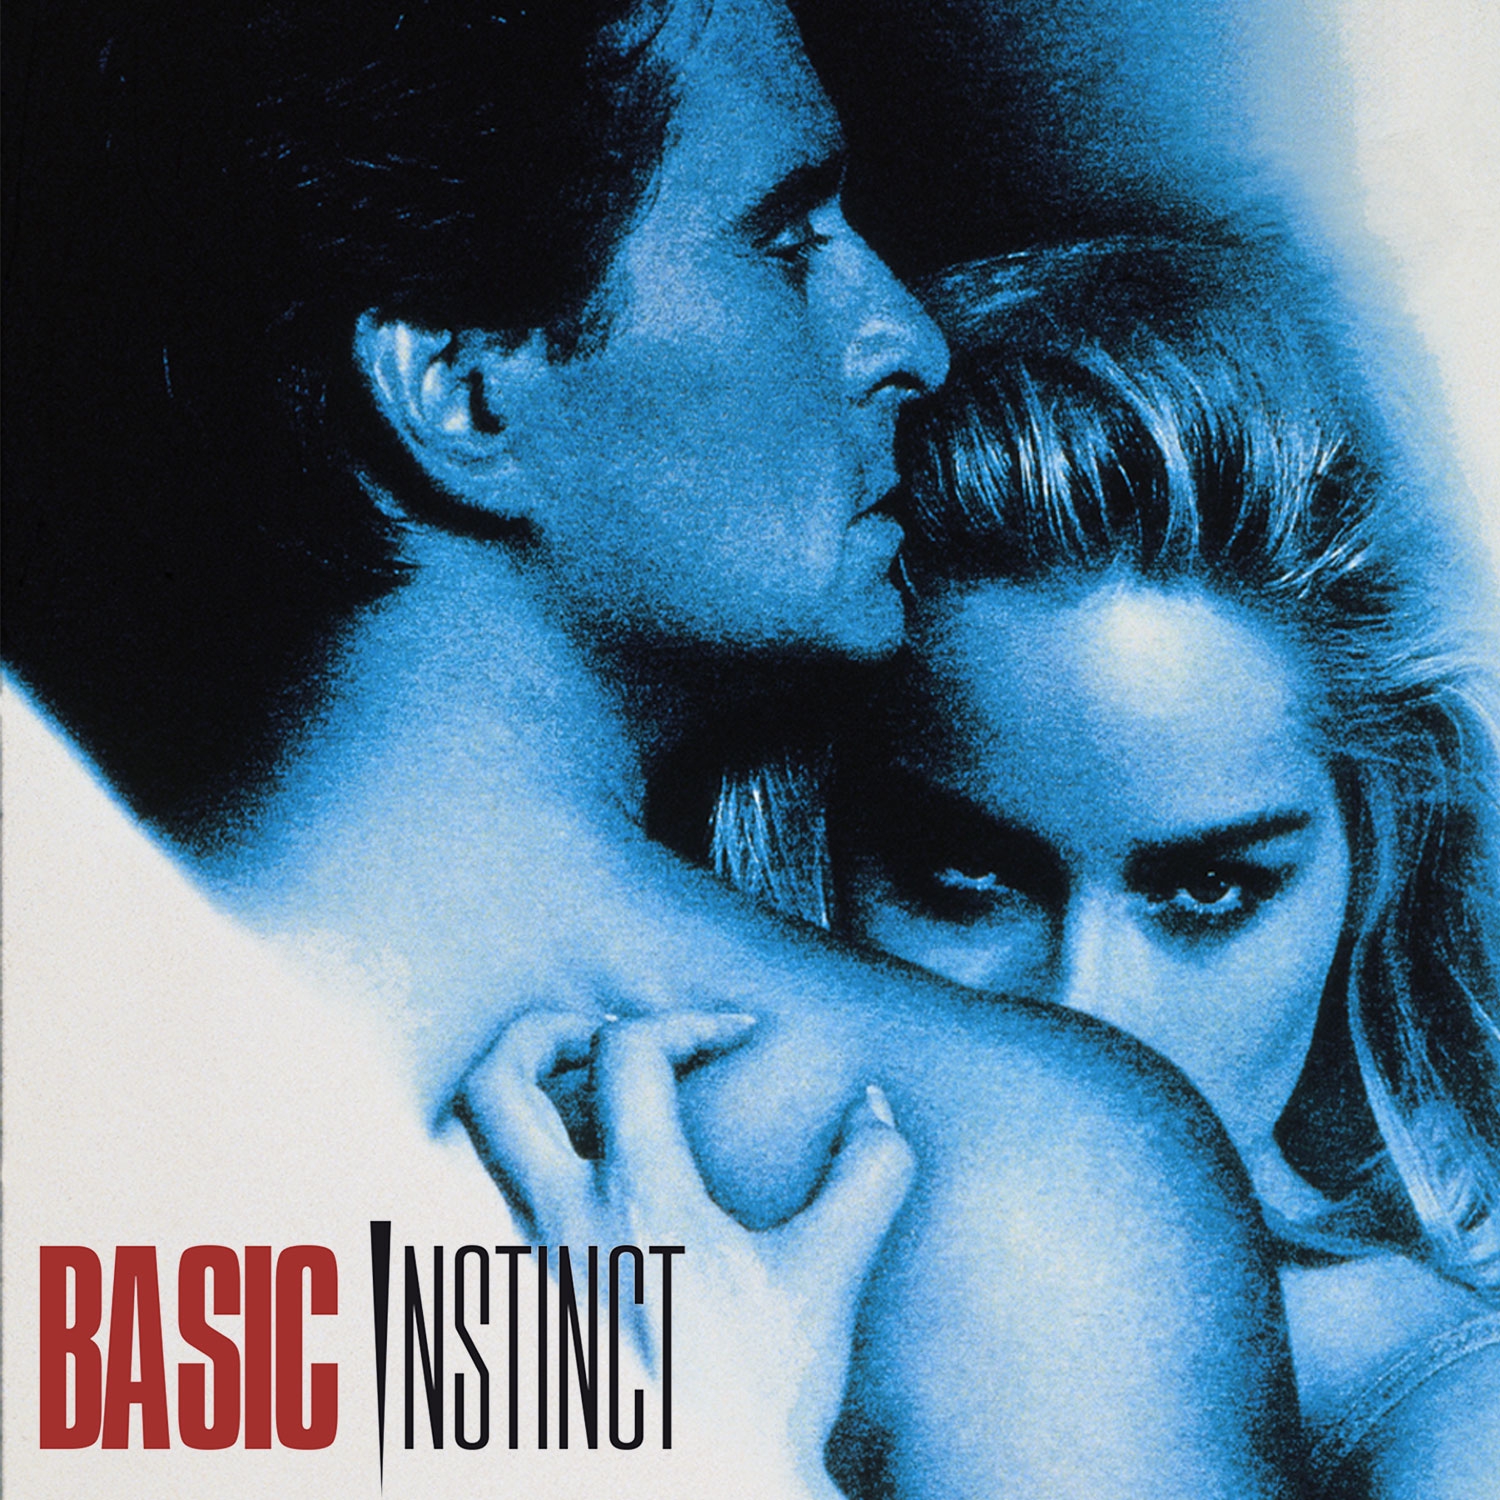 Stream Basic Instinct Online, Download and Watch HD Movies